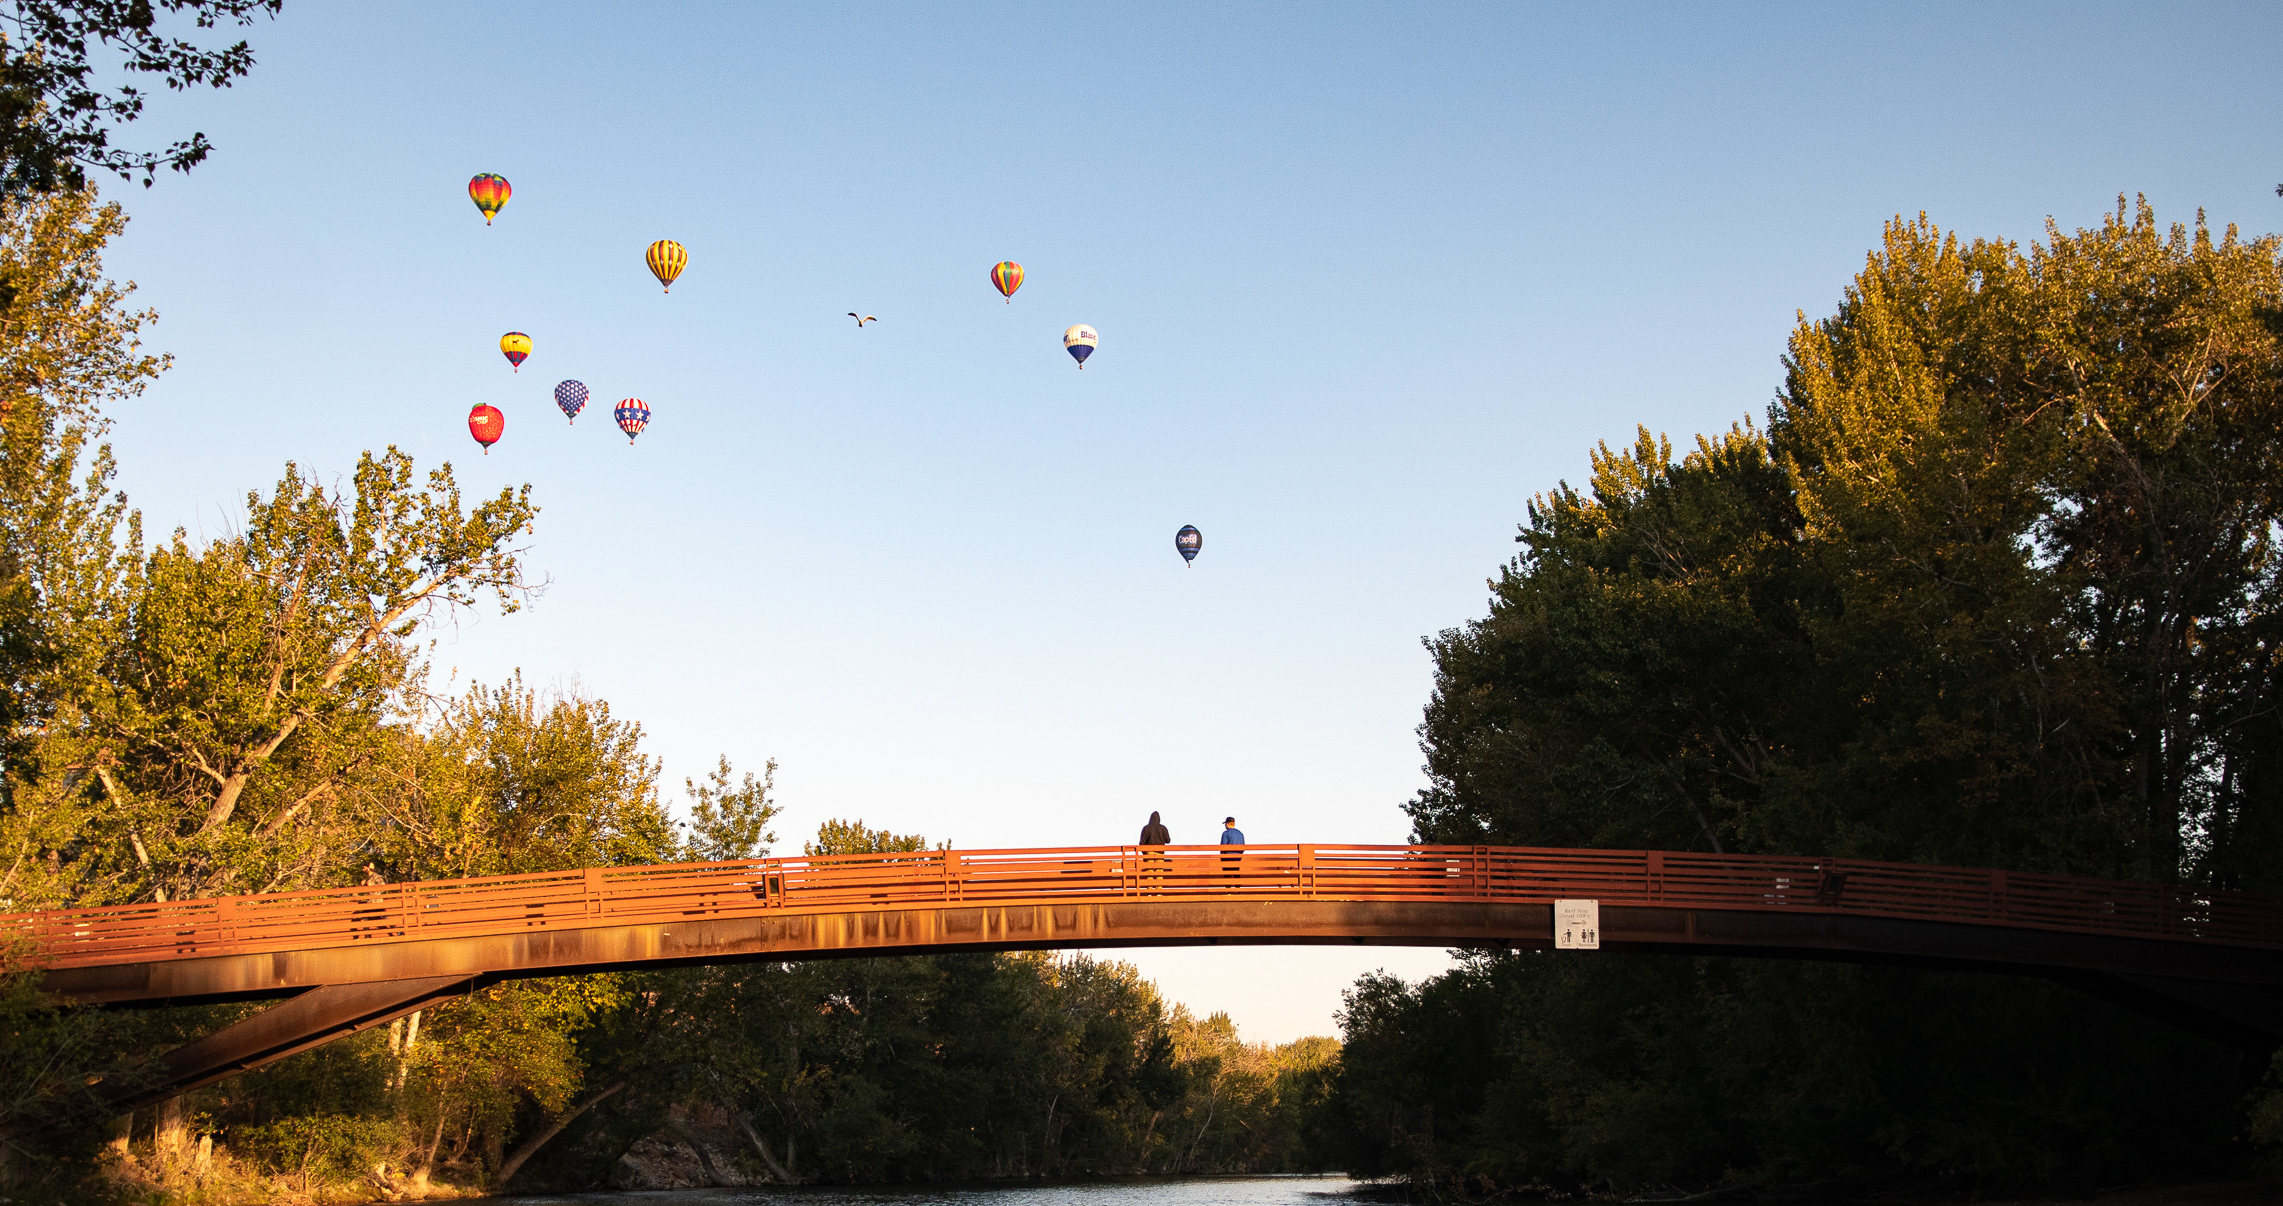 Hot air balloons over friendship bridge 